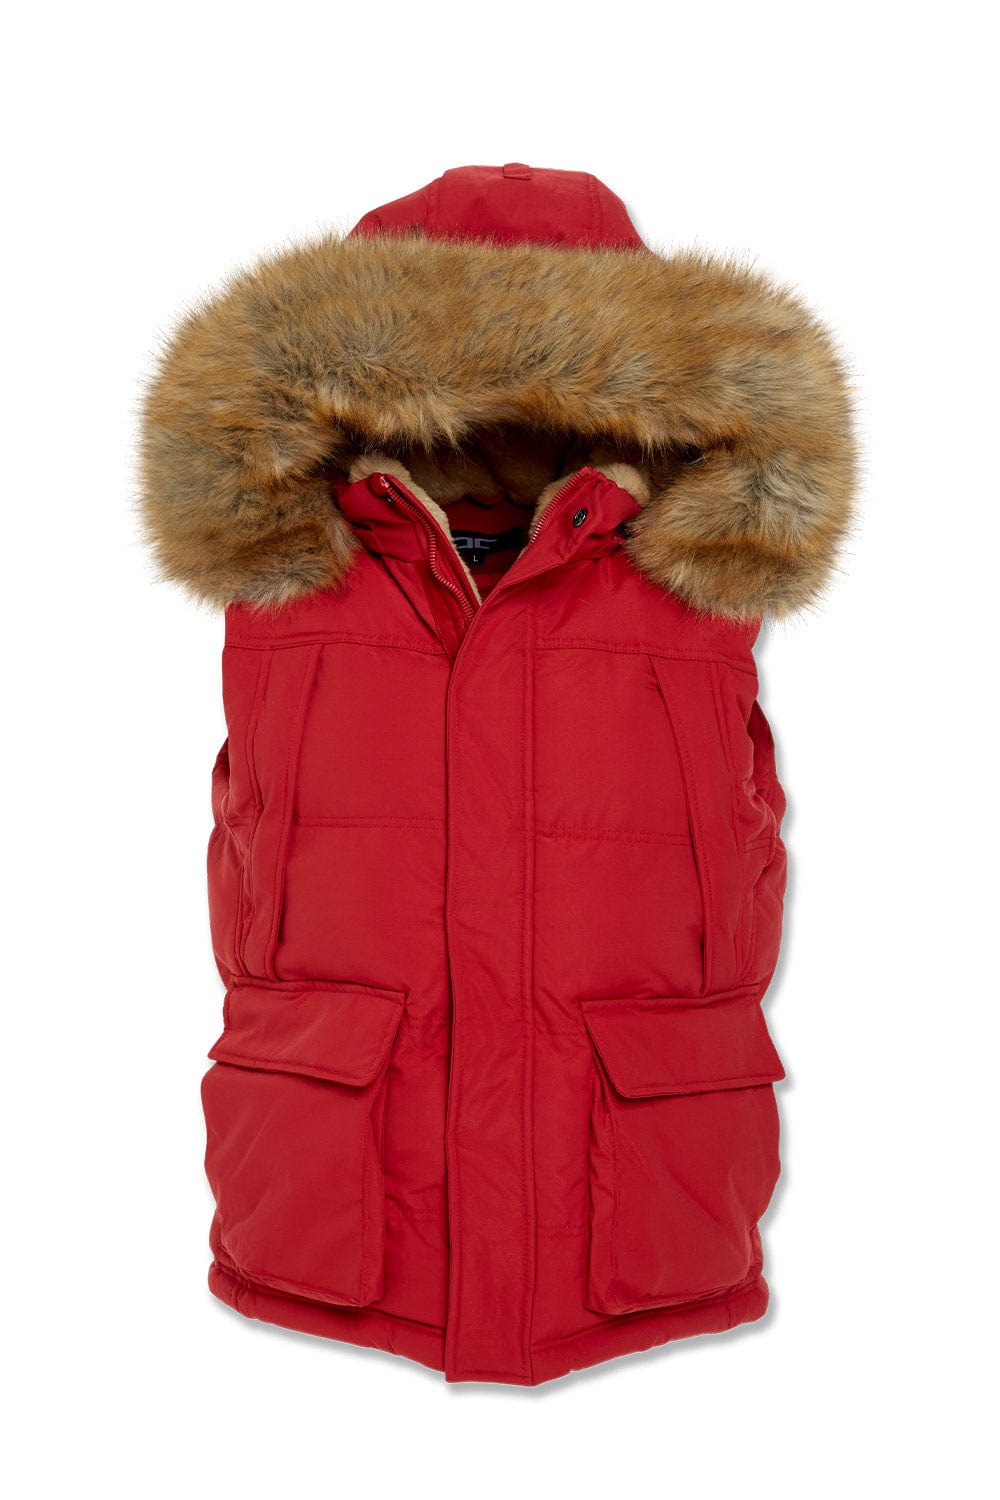 Jordan Craig Yukon Fur Lined Puffer Vest (Red) S / Red